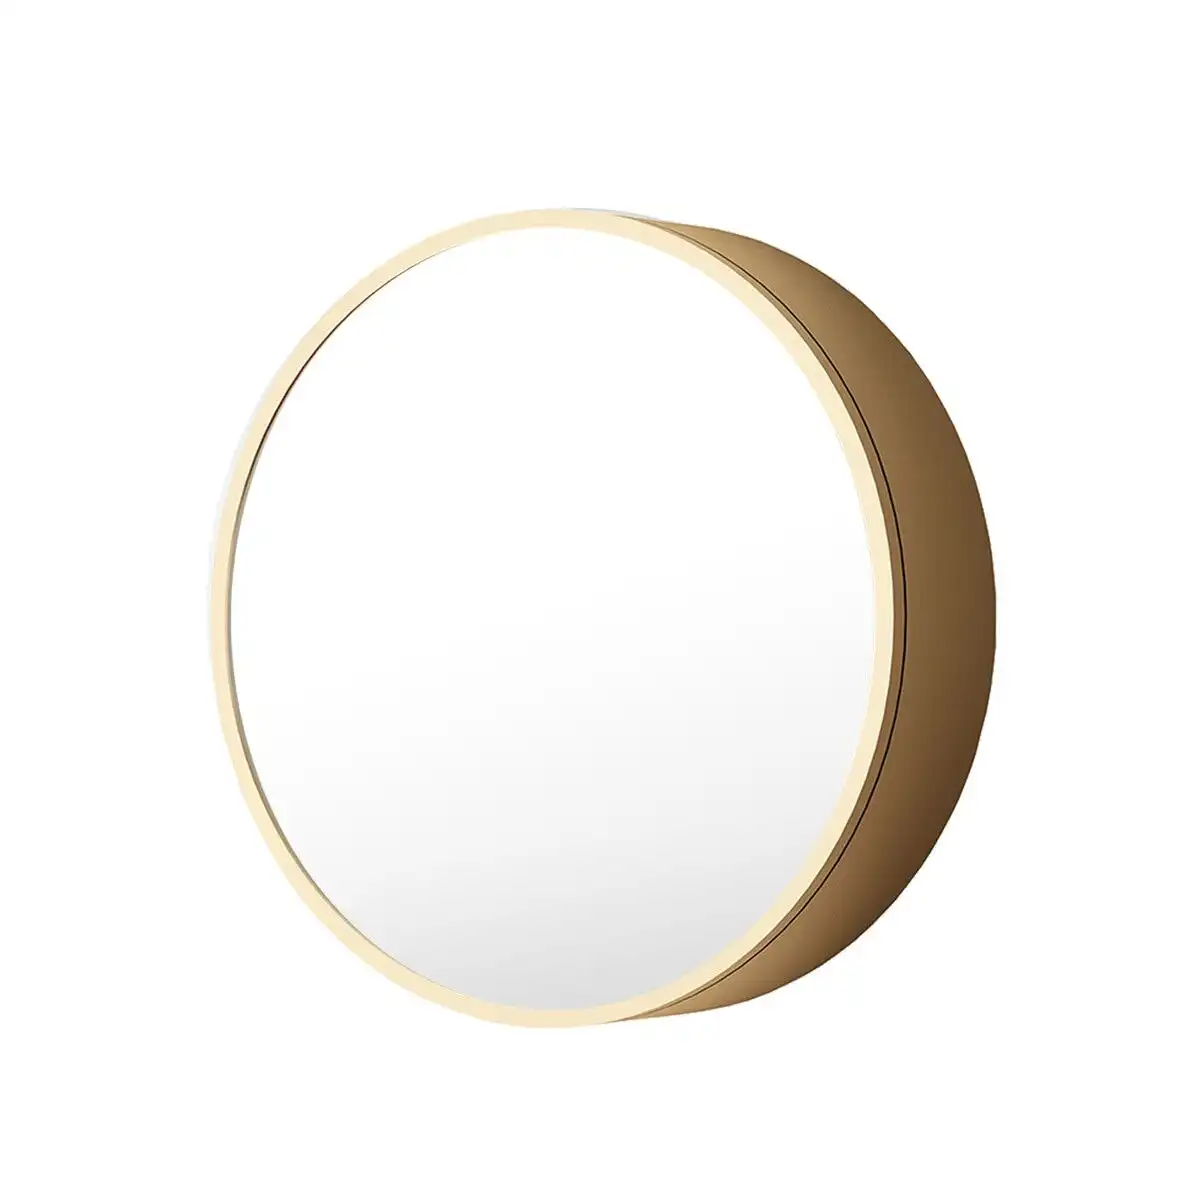 Ausway Bathroom Mirrored Cabinet Medicine Vanity Round Wall Mirror Cupboard with Storage Sliding Door Gold 60cm Diameter